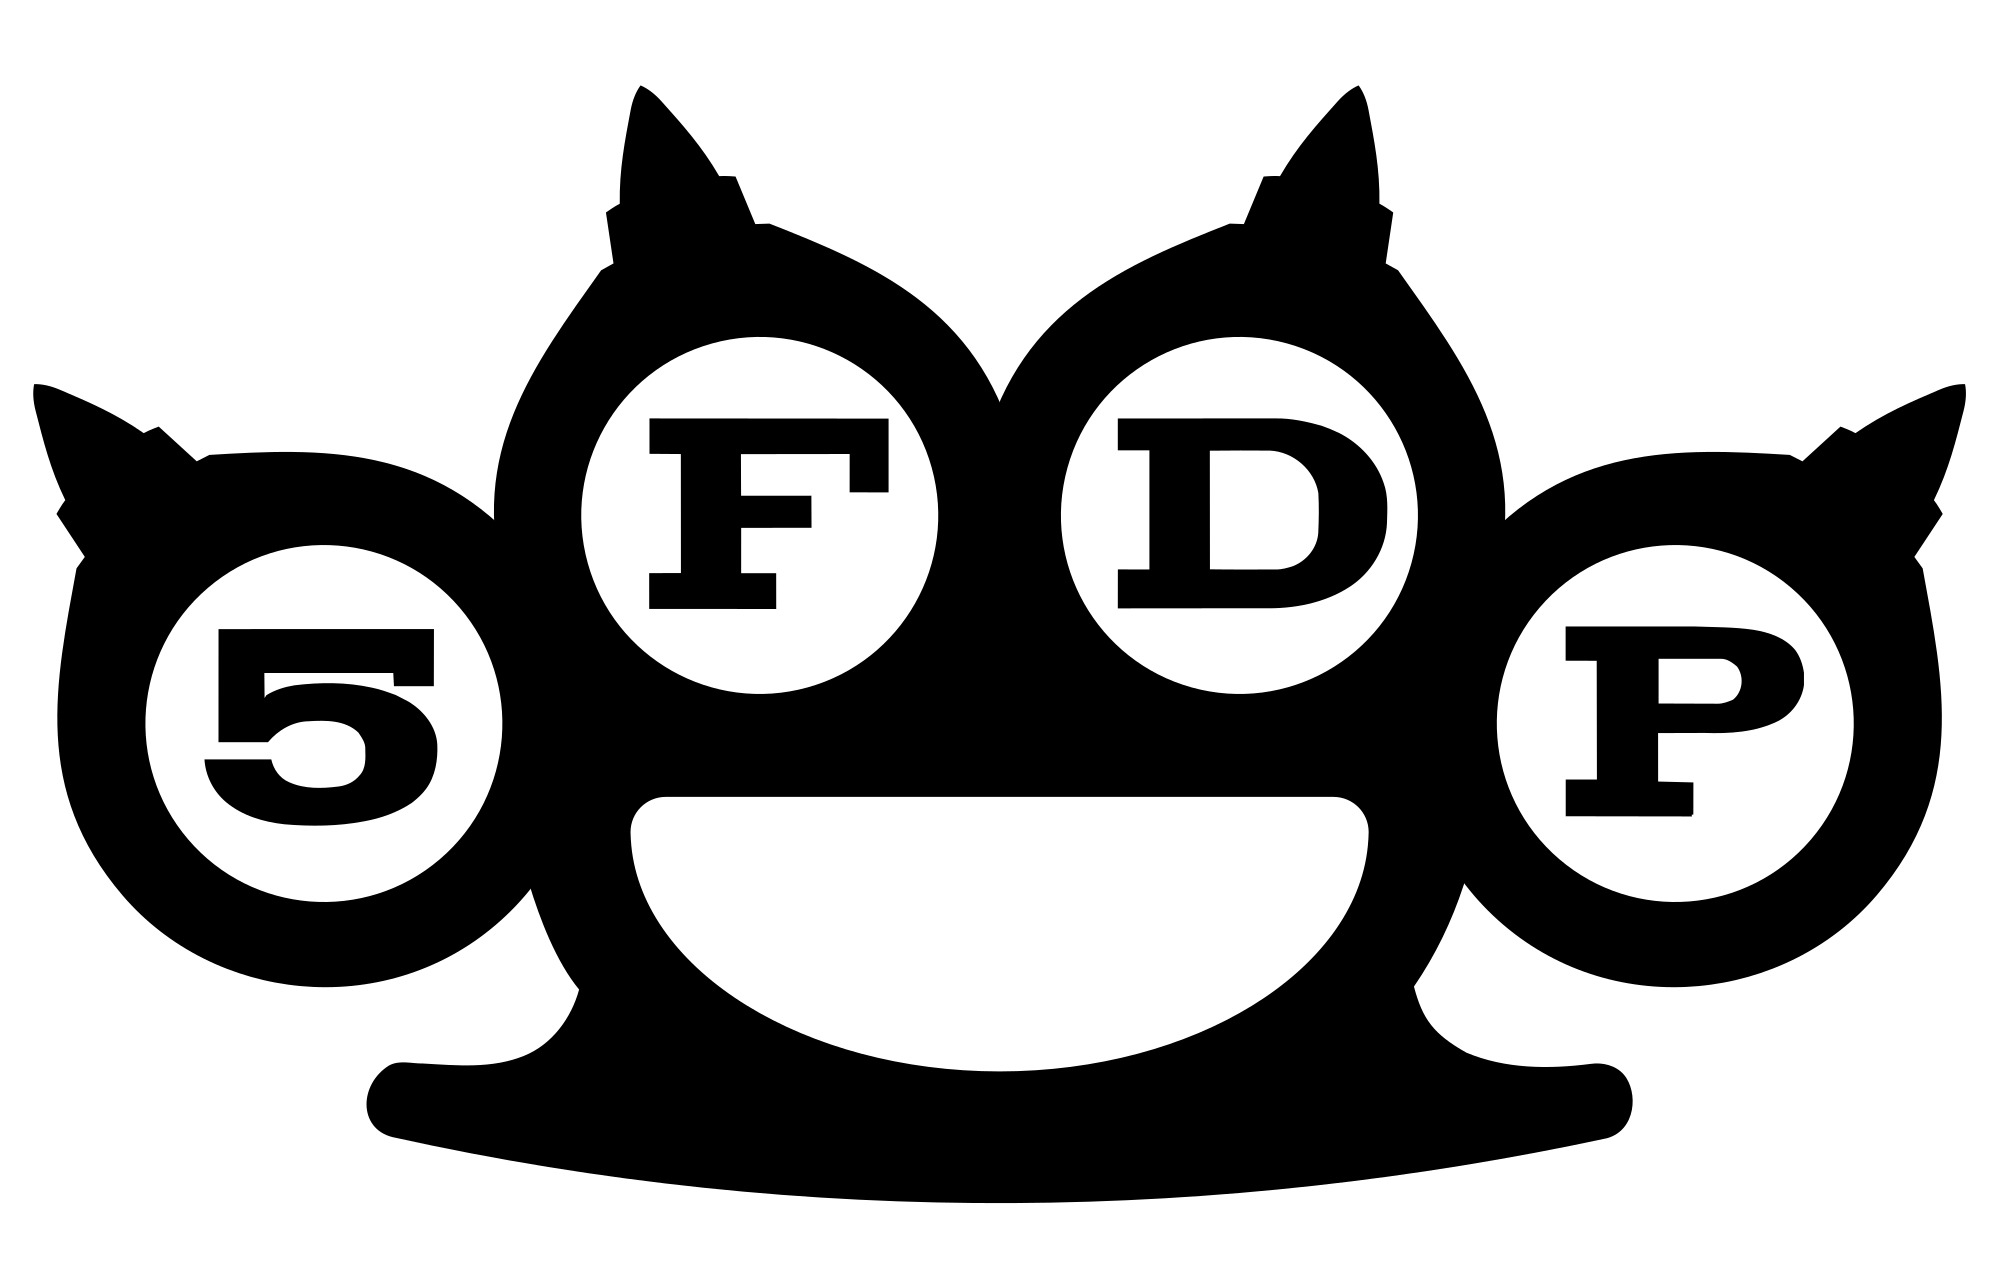 5FDP Logo - Datei:5fdp logo.svg